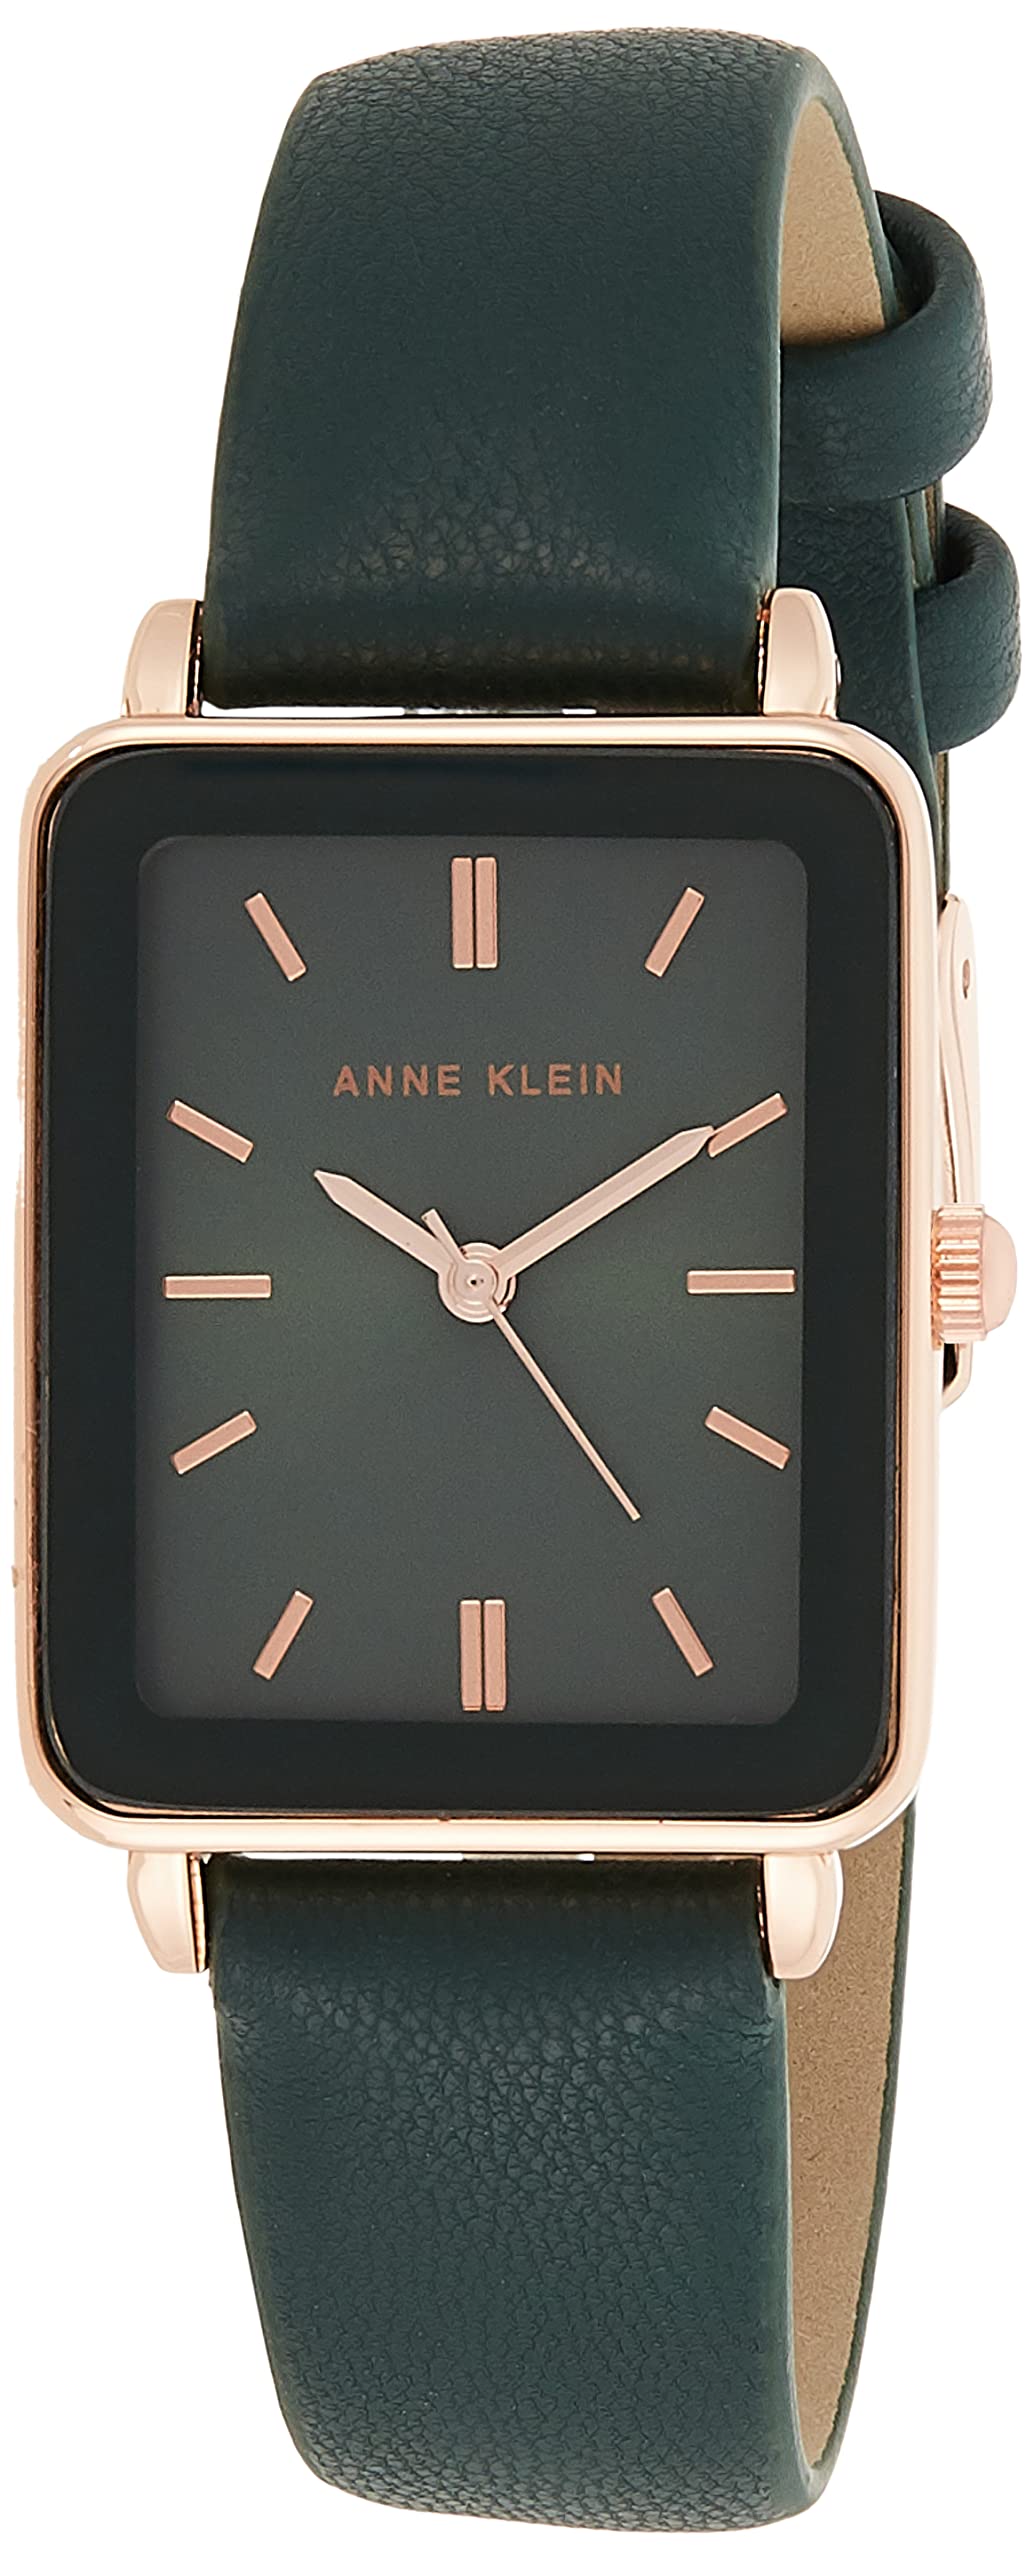 Anne Klein Women's Strap Watch, AK/3702